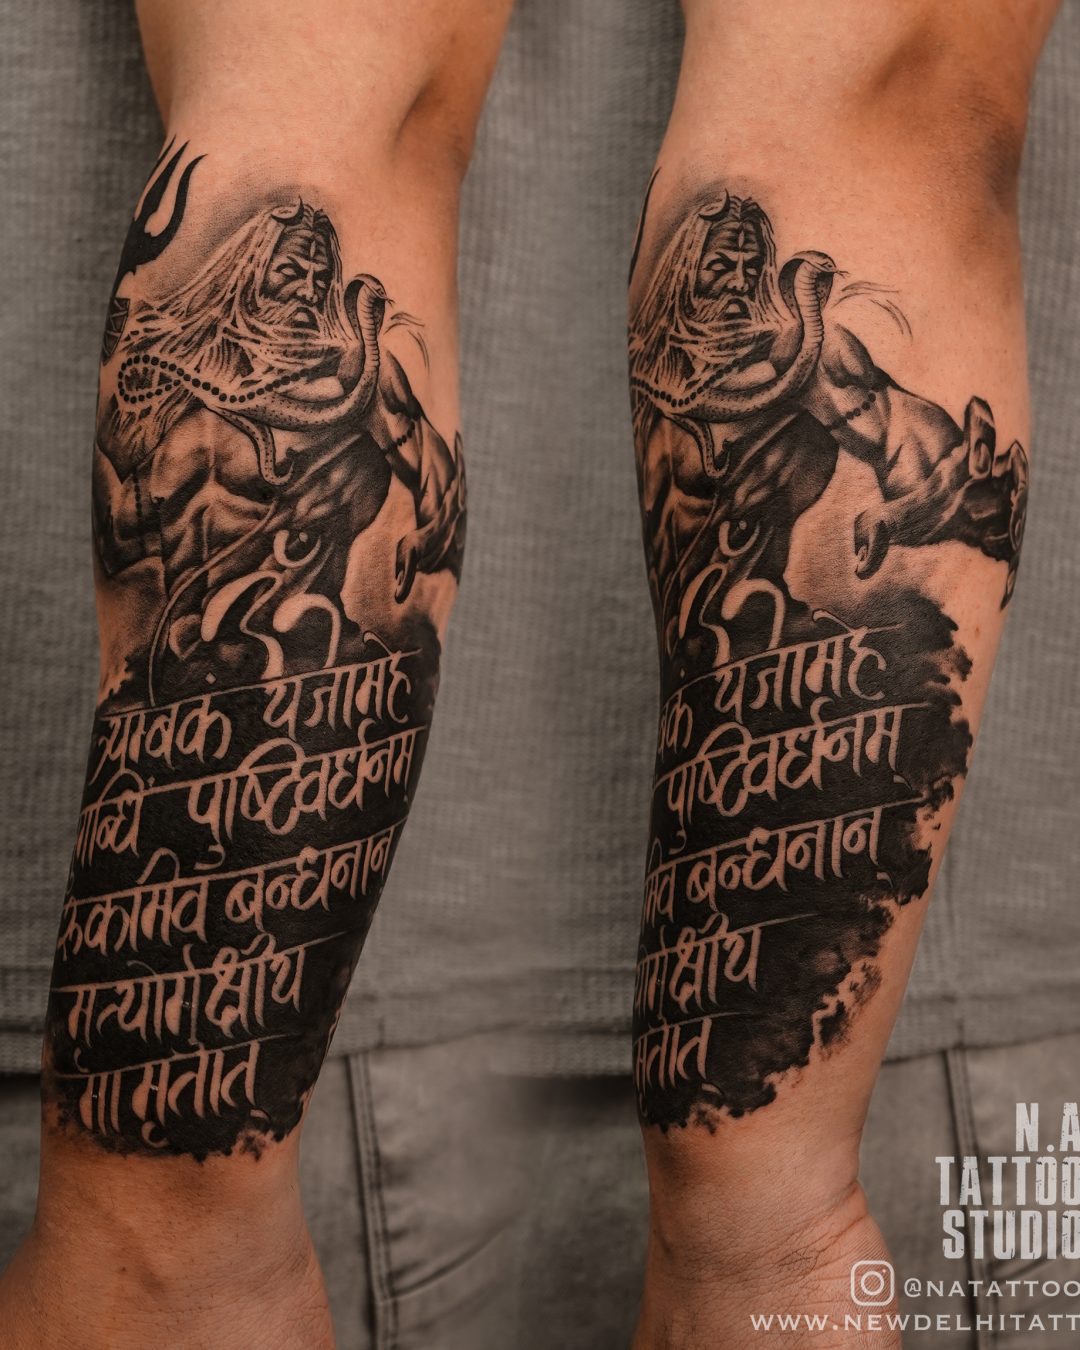 Crazy ink tattoo  Body piercing on Twitter Om and Mandala tattoo with  Gayatri mantra tattoo Done by tattoo artist Tarun gohil At crazy ink tattoo  studio Raipur India omtattoo mandalatattoo gayatrimantra 